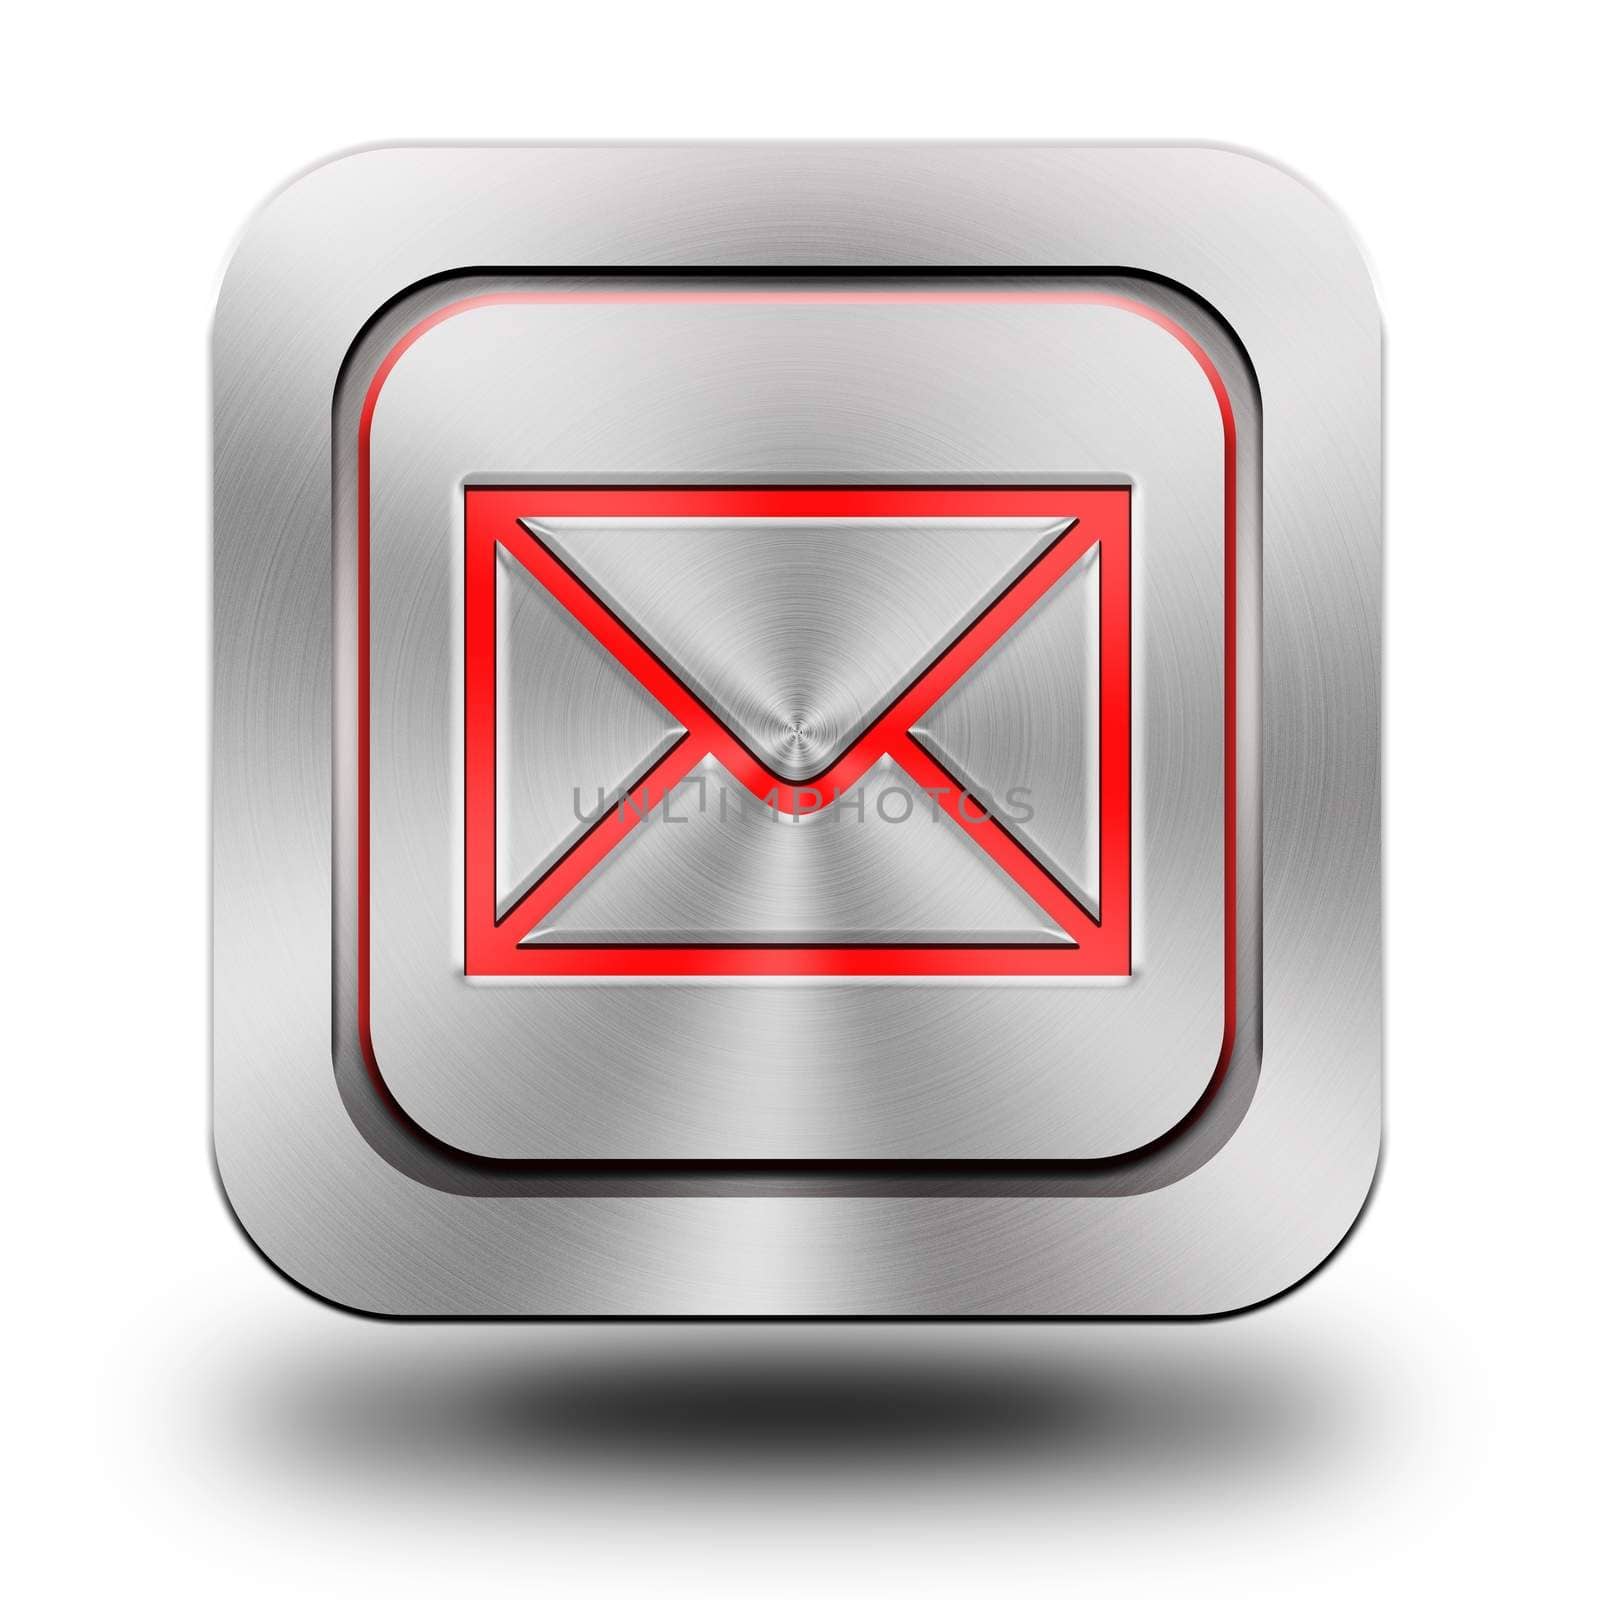 E-mail aluminium or steel, glossy icon, button, sign